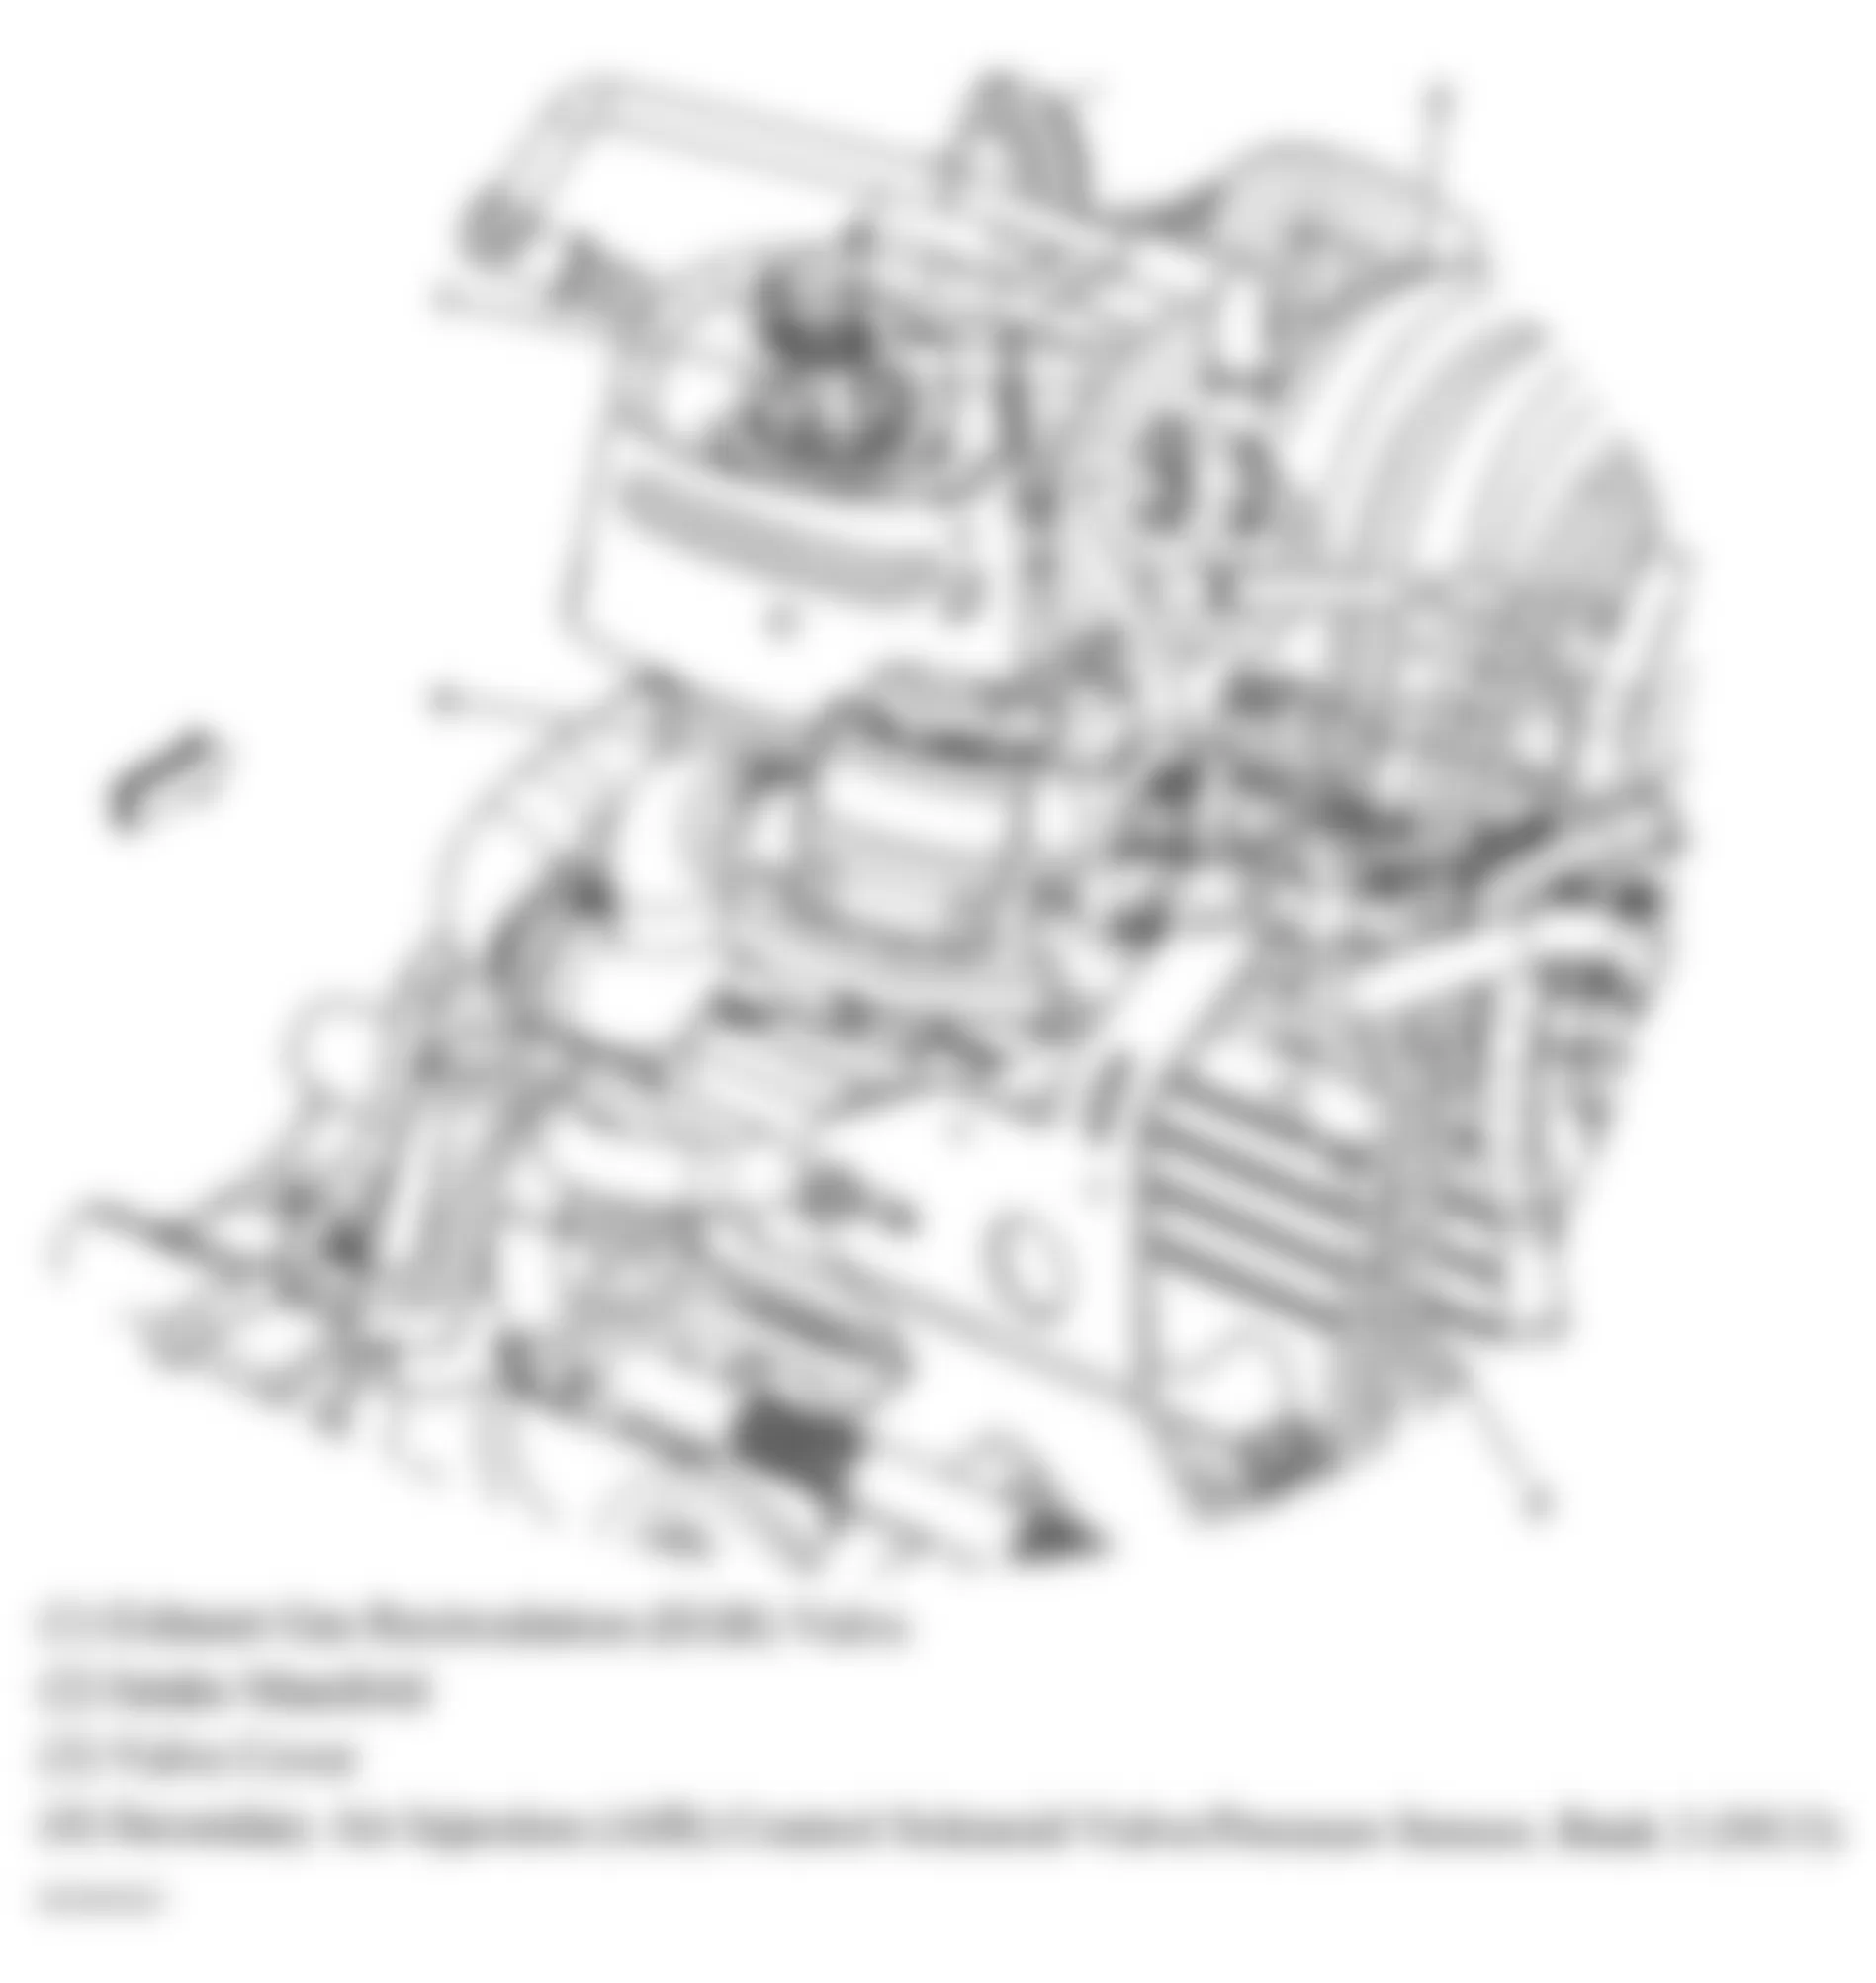 Buick Allure CXL 2006 - Component Locations -  Upper Rear Of Engine (3.8L)